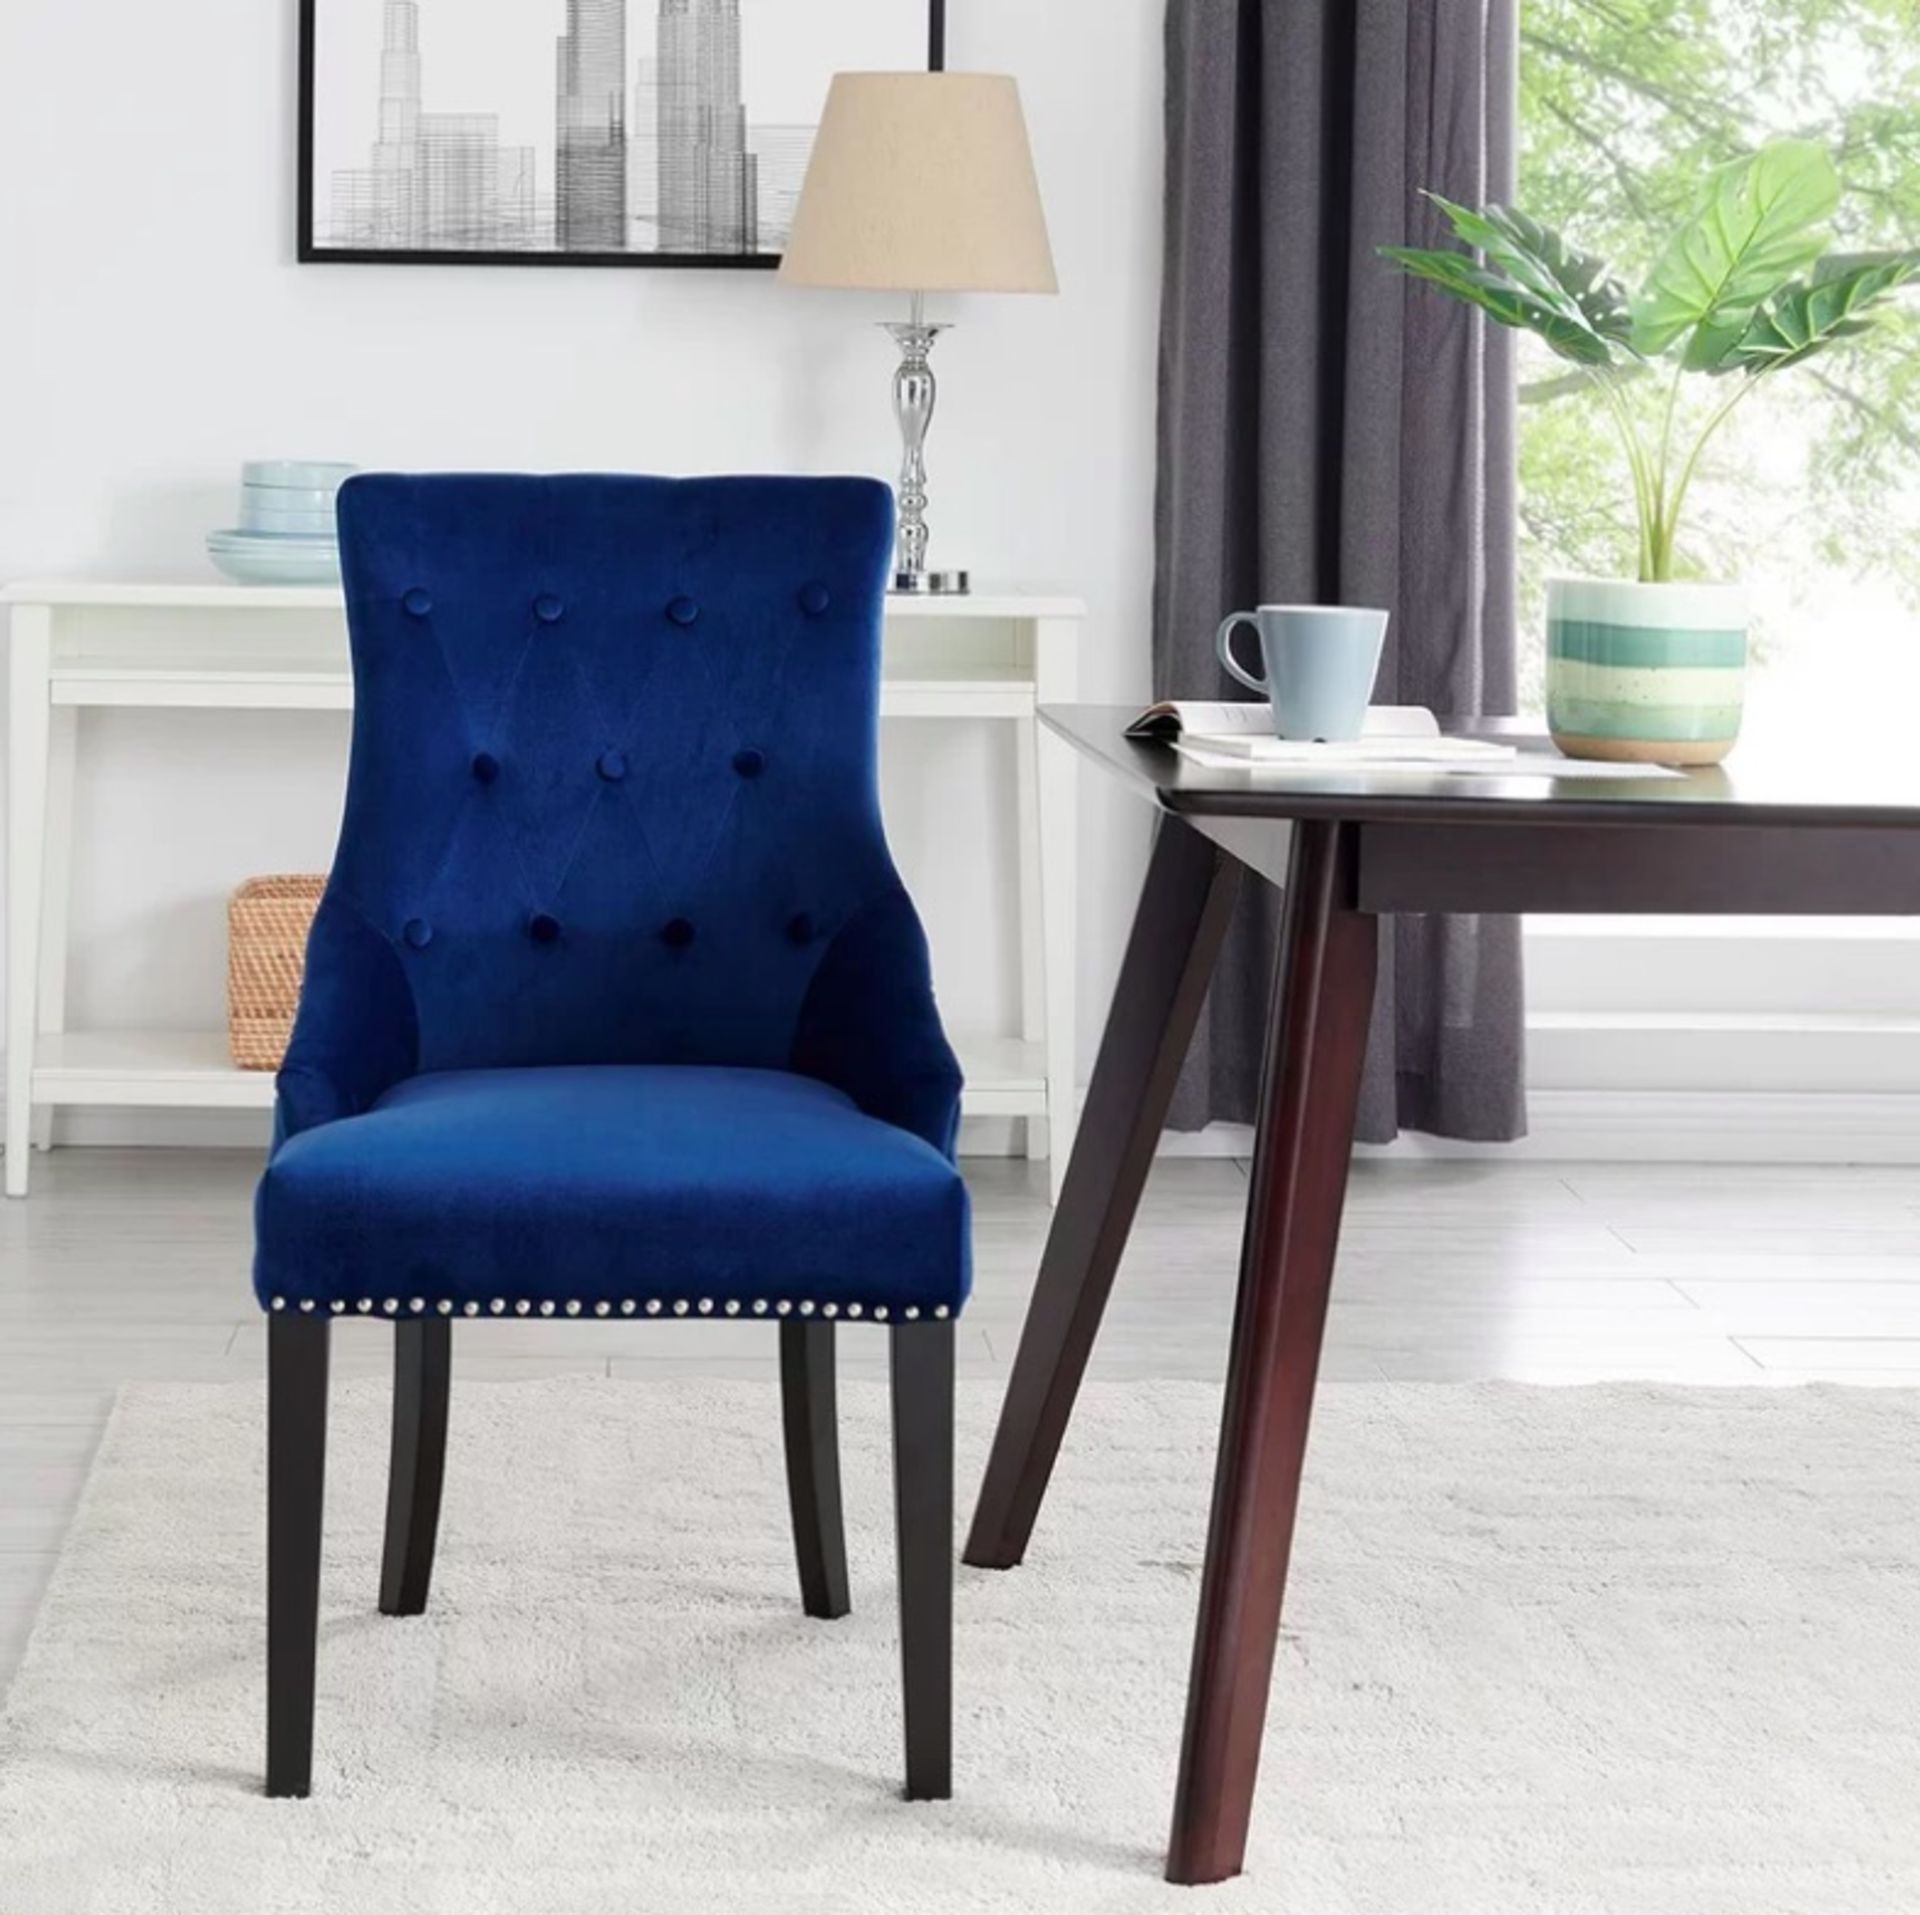 Velvet Dining Chair A stunning royal blue velvet dining chair classic yet contemporary100cm H x 56cm